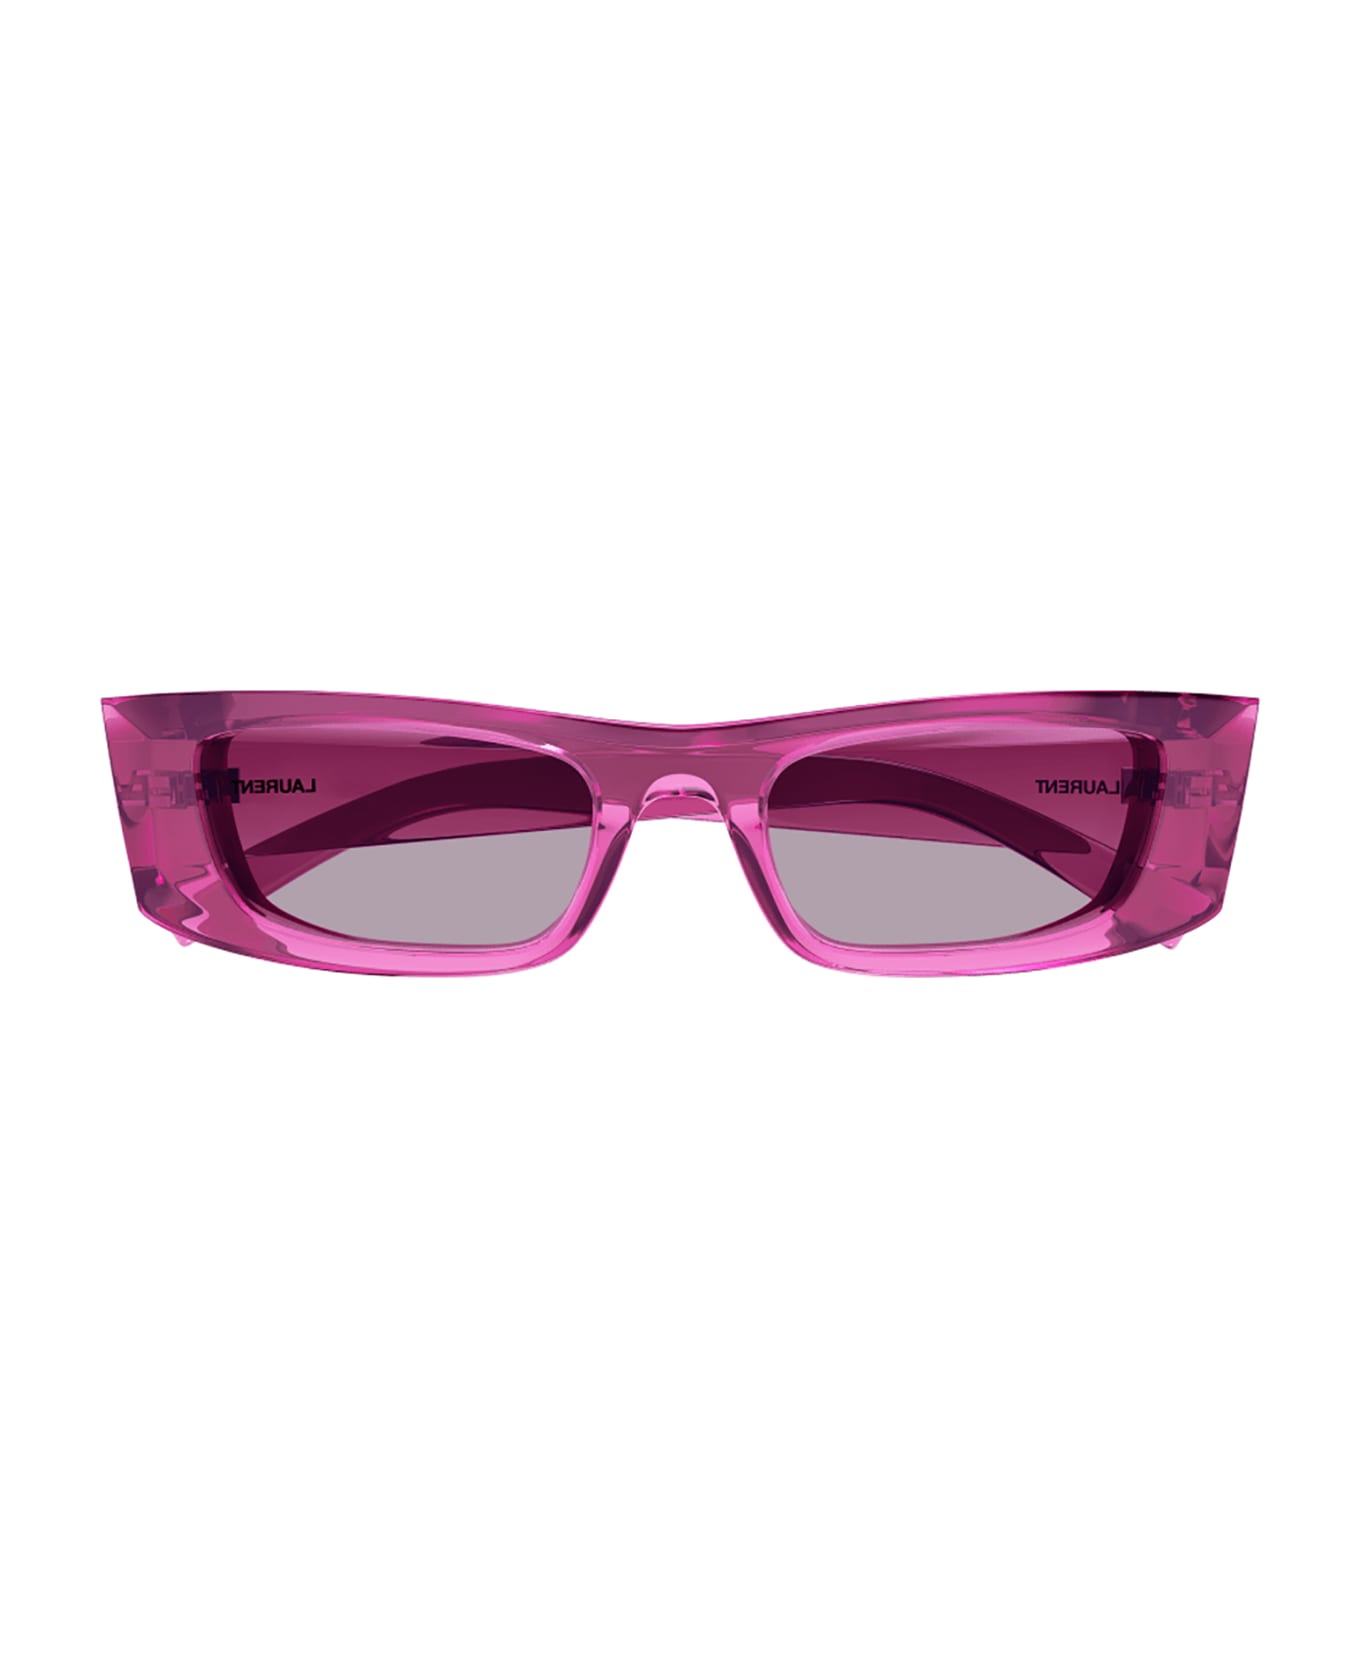 Saint Laurent Eyewear Sl 553 Sunglasses - 003 pink pink violet サングラス